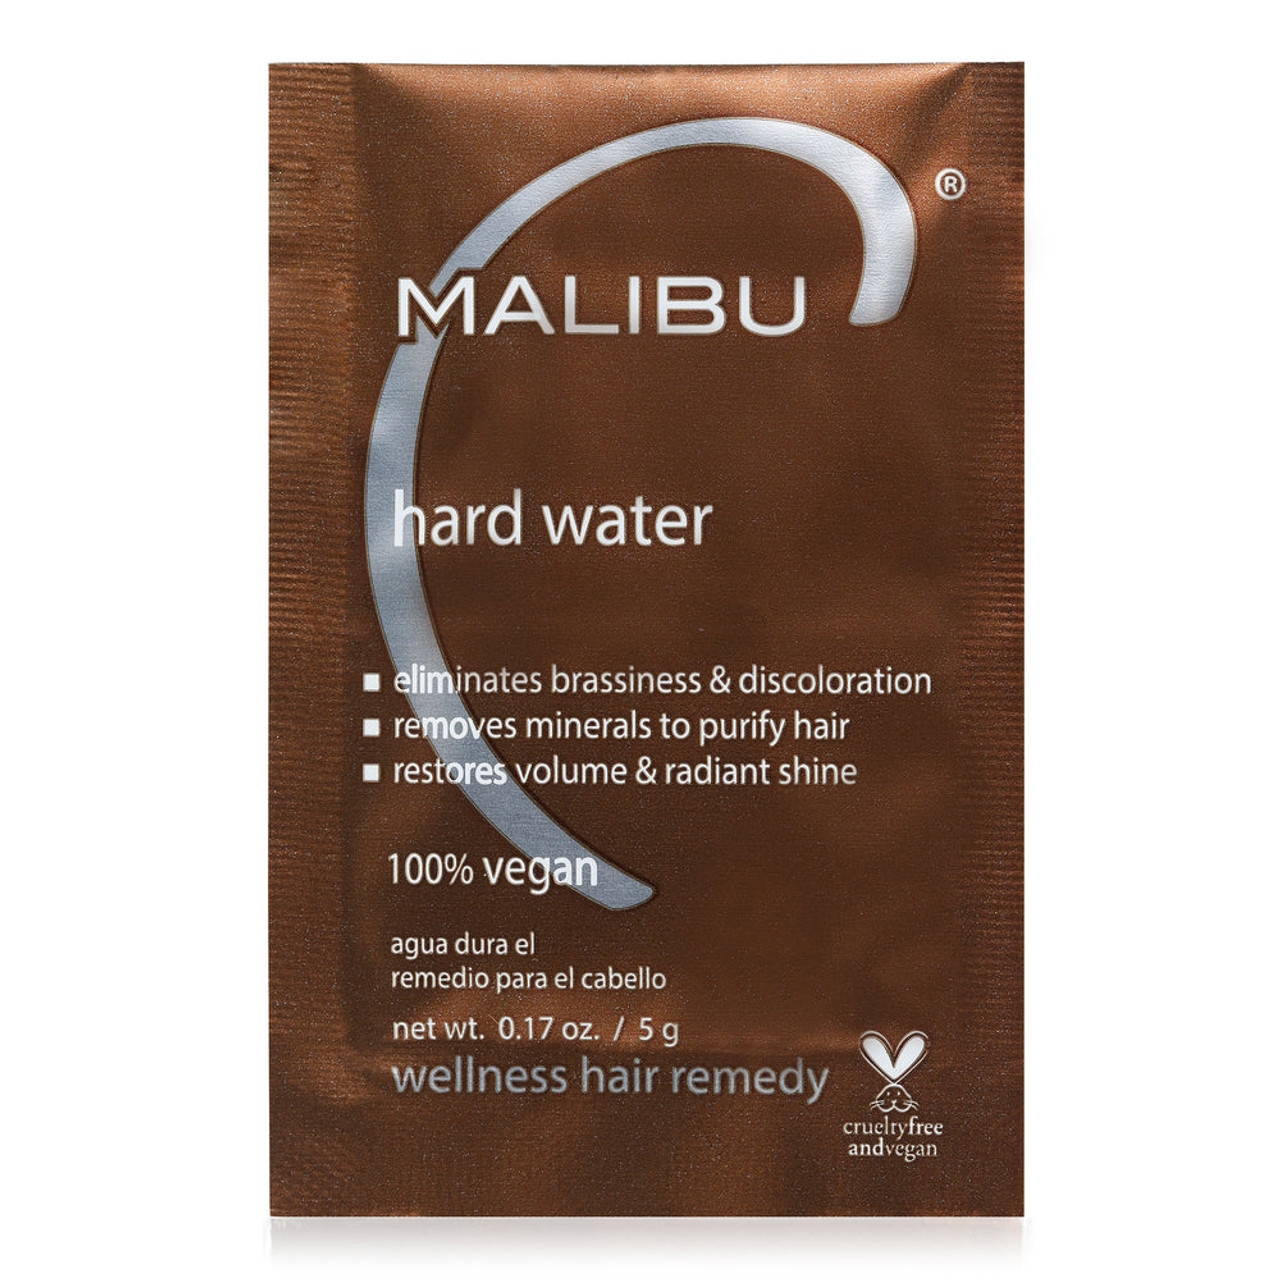 Malibu C Hard Water Wellness Remedy Treatment - 1 Packet